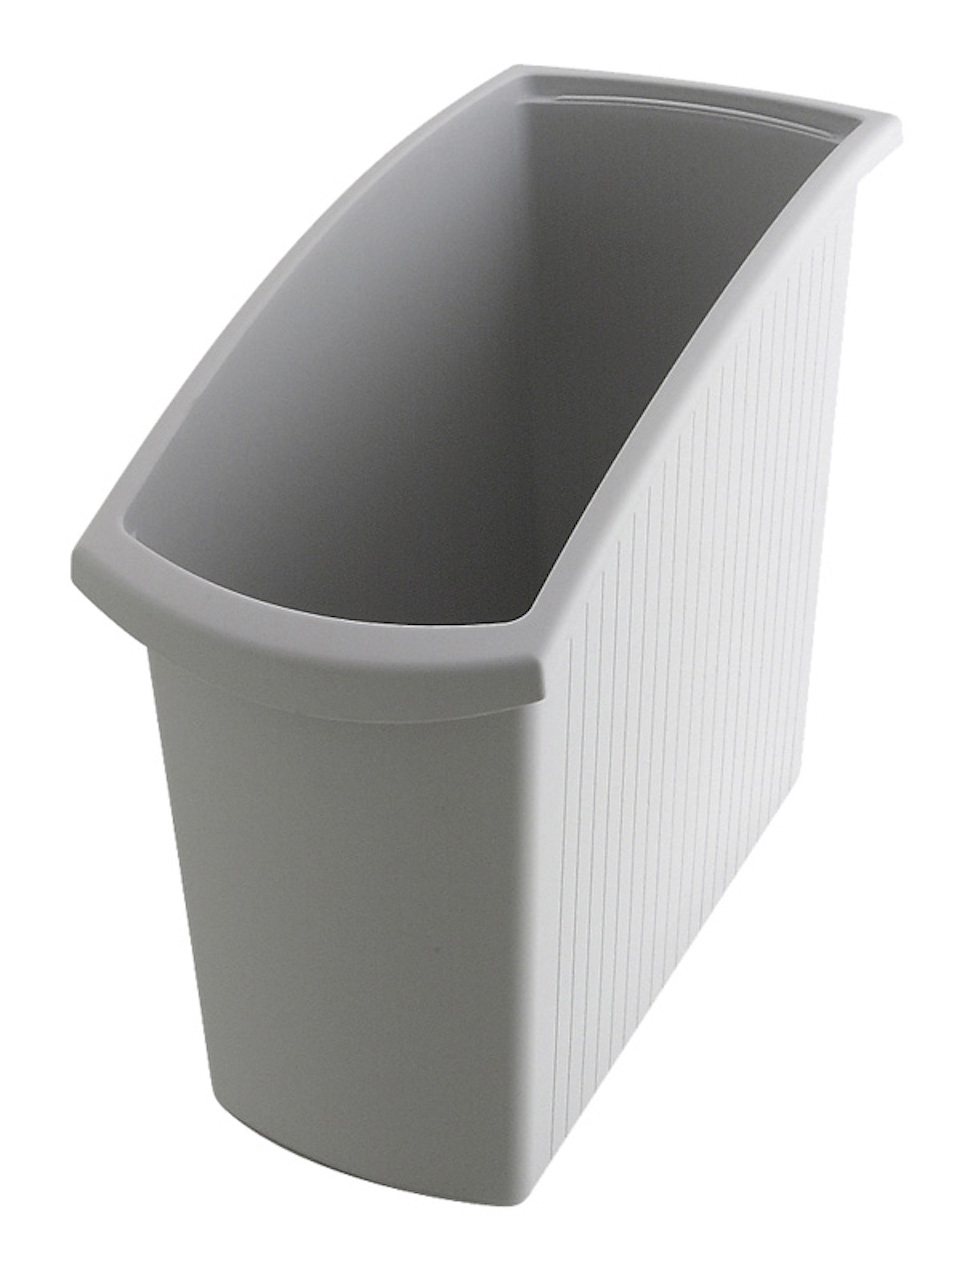 Rechteckiger Kunstoff Papierkorb | 18 Liter, HxBxT 34,5x19,4x45cm | Grau